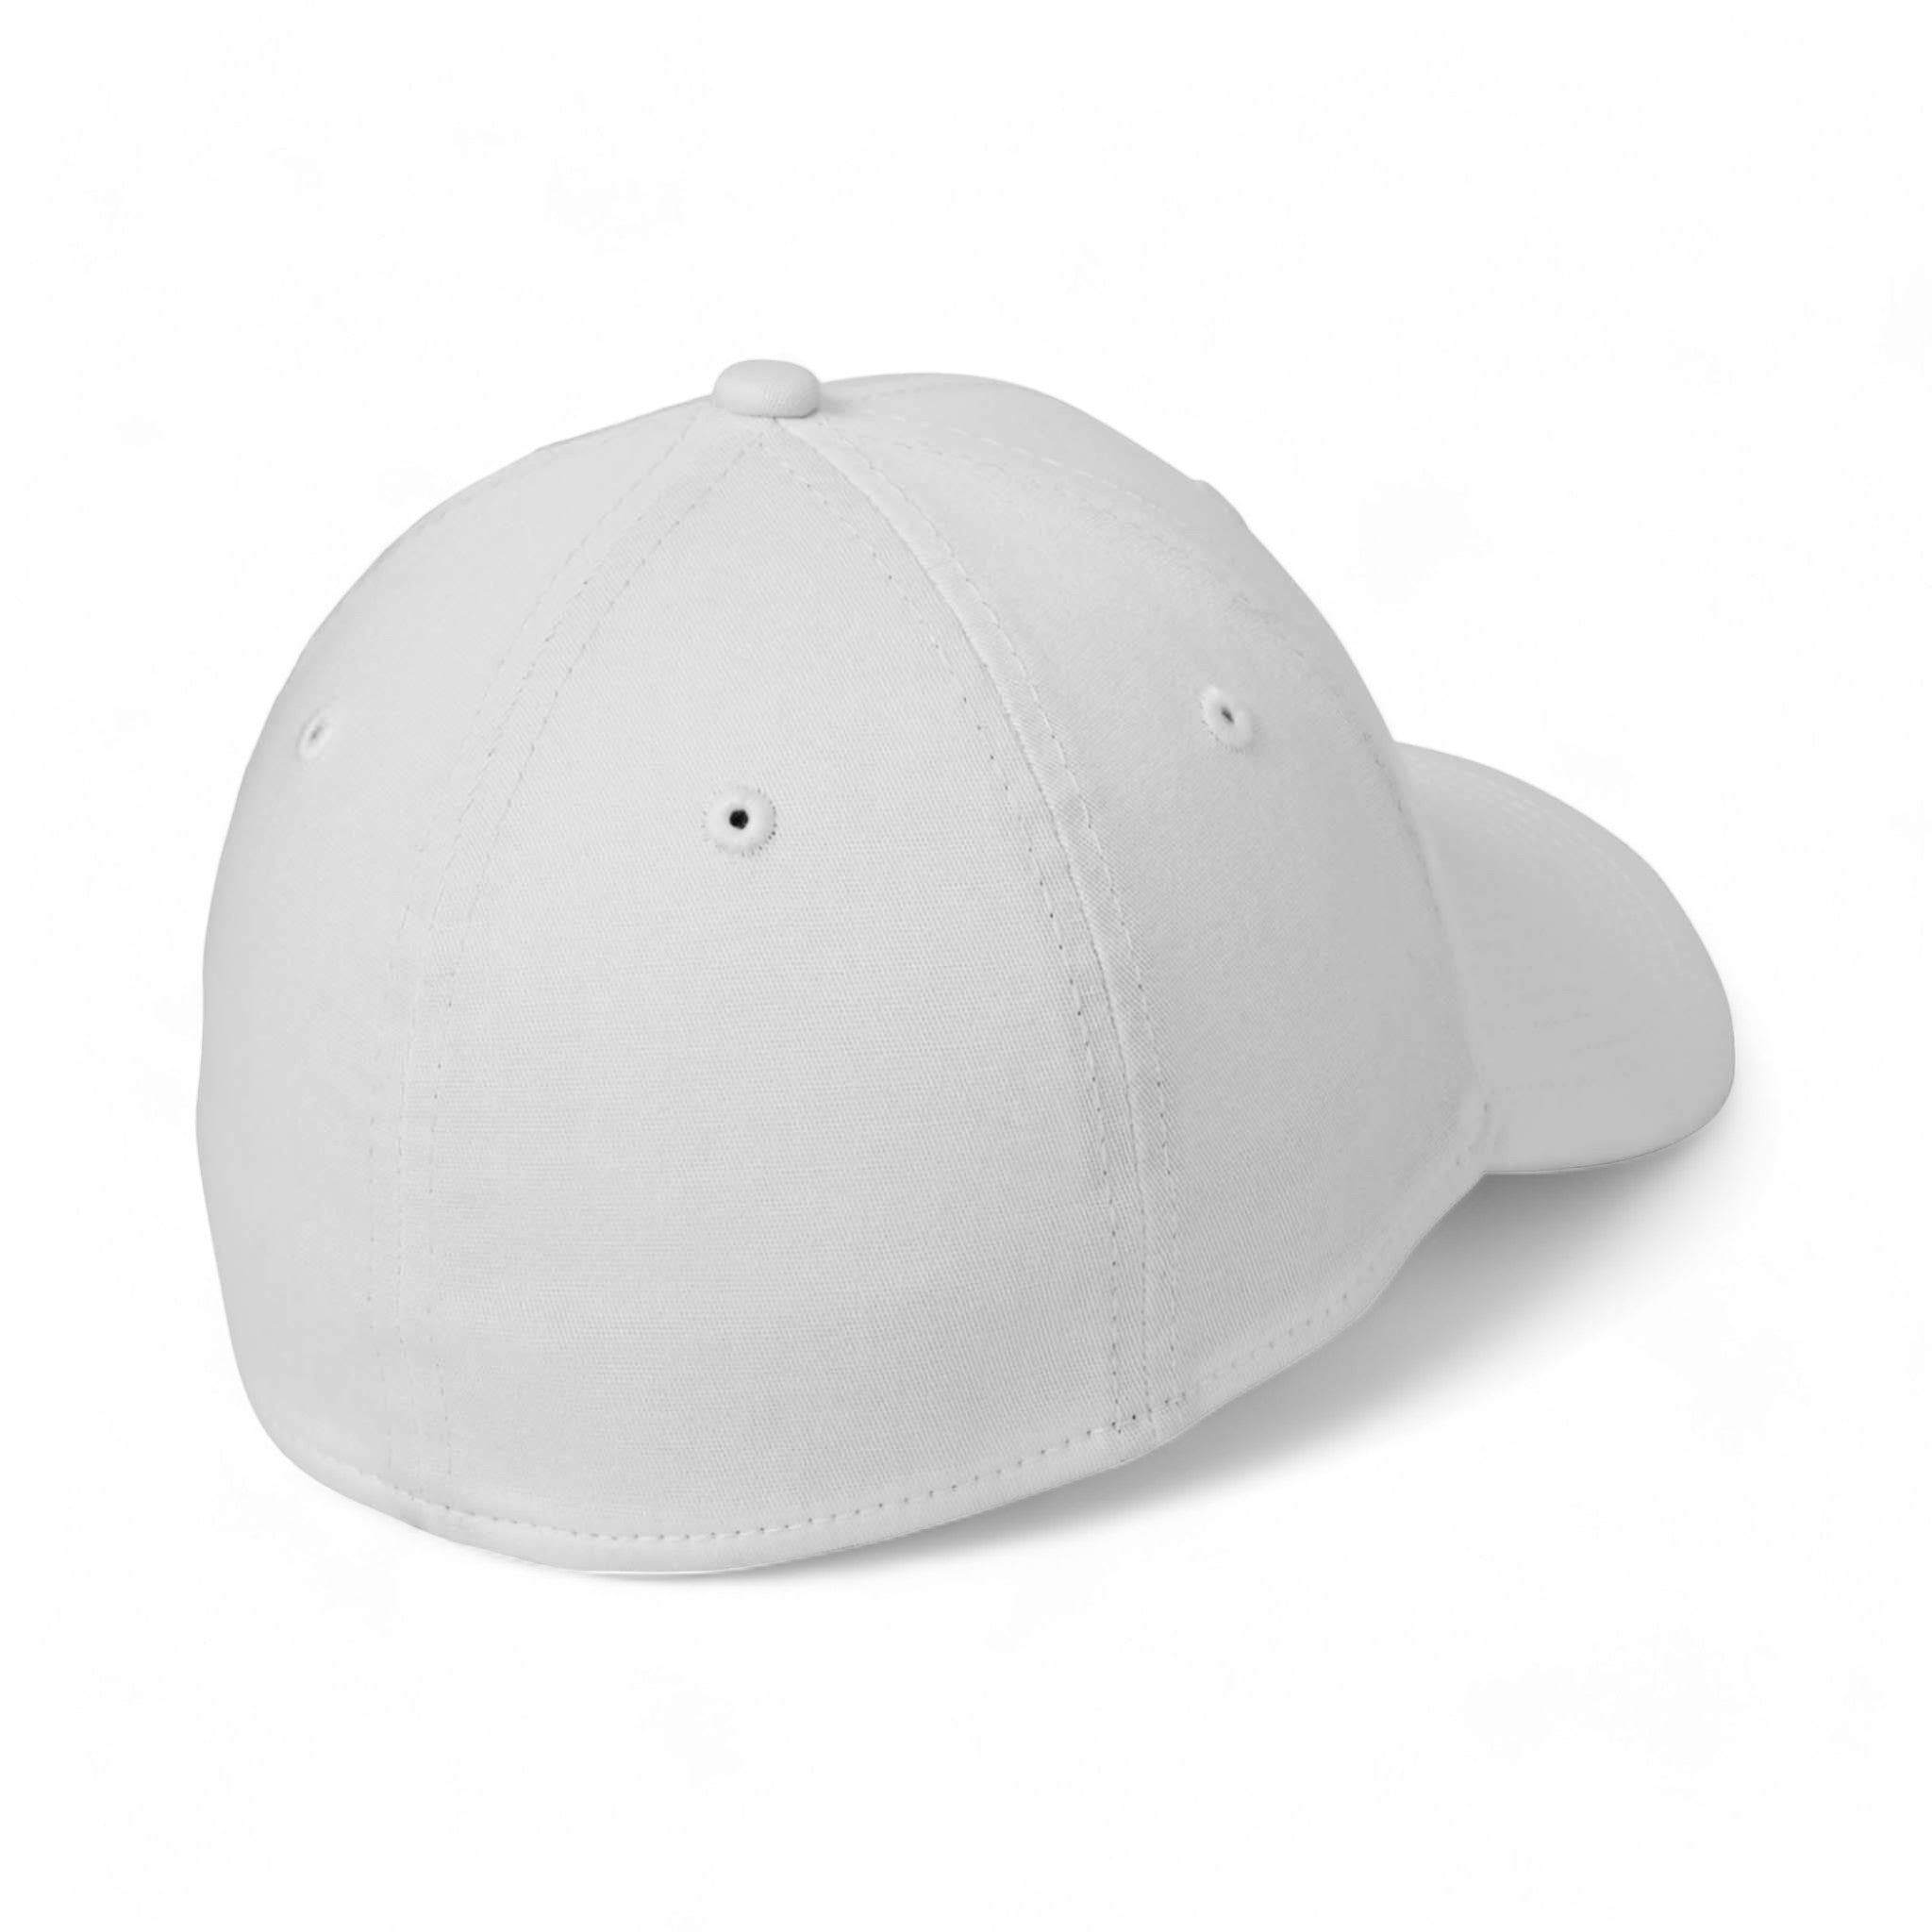 Back view of New Era NE1000 custom hat in white